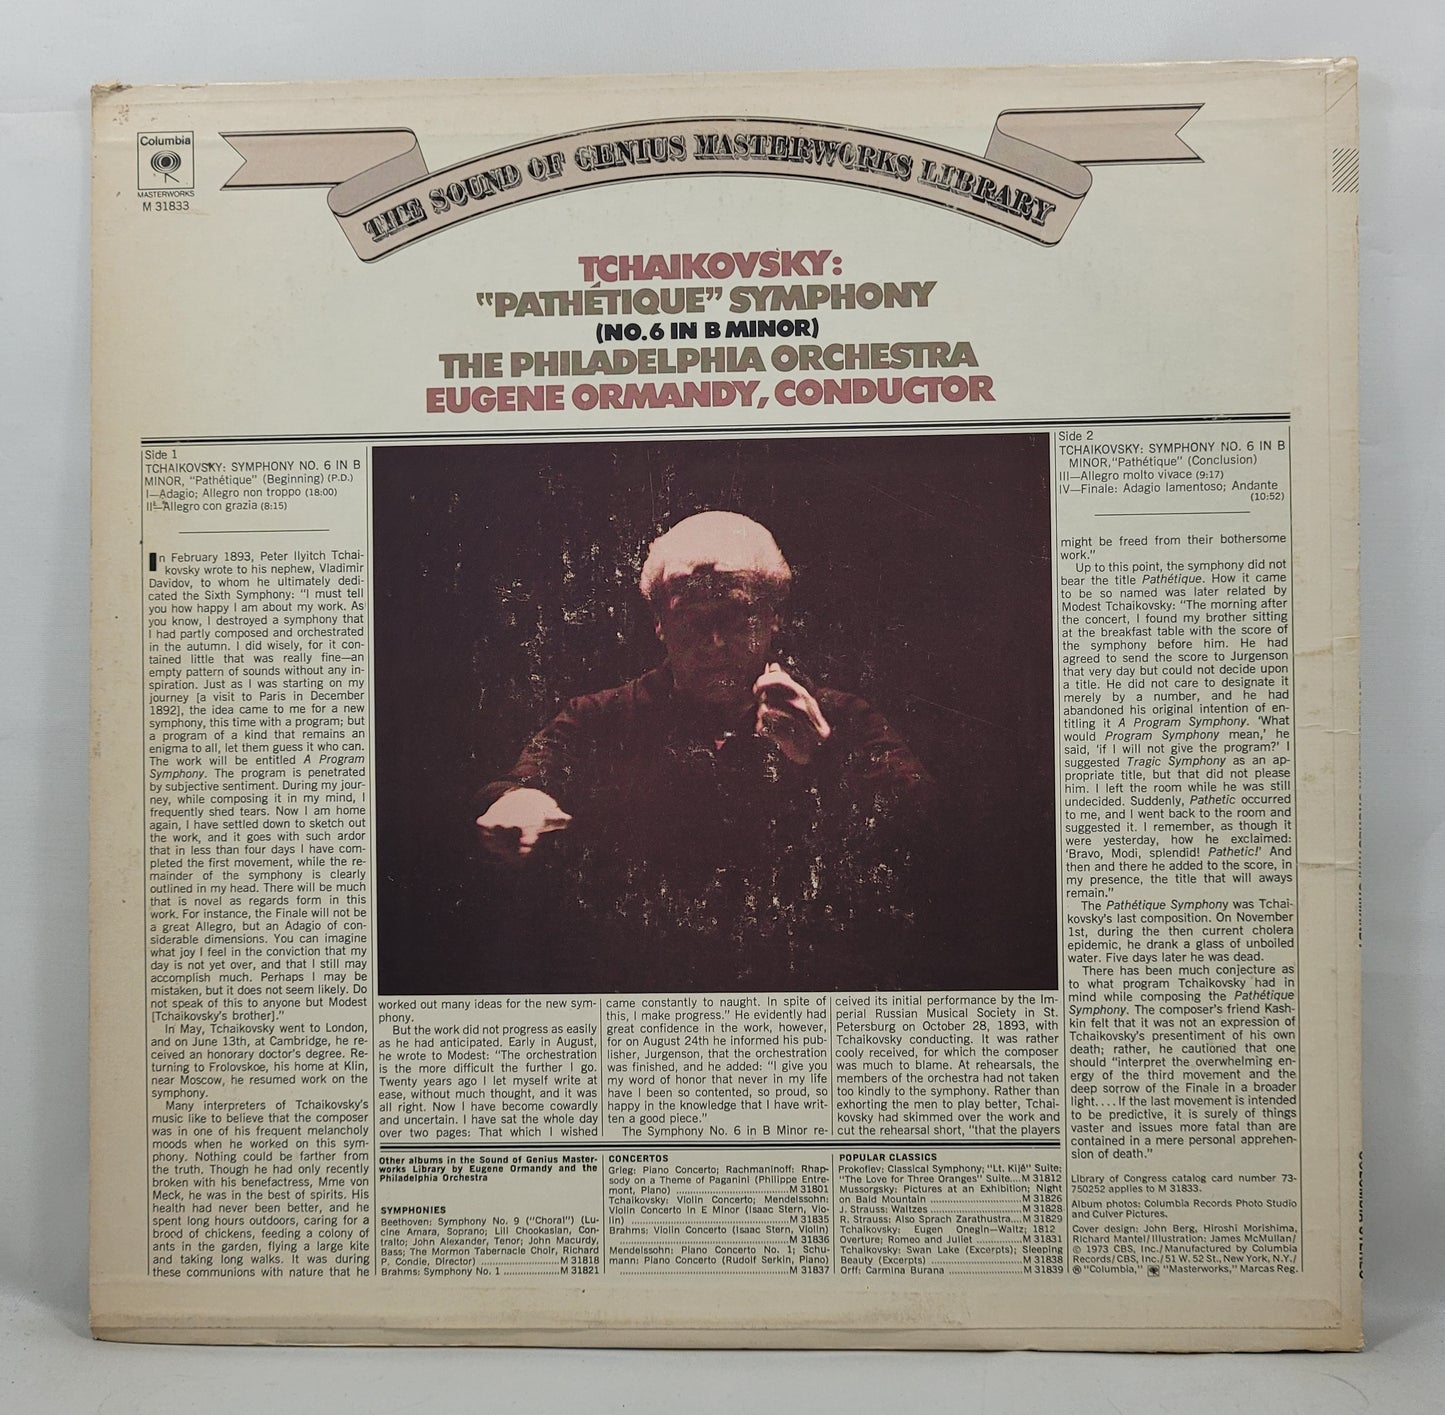 Eugene Ormandy - "Pathetique" Symphony (No. 6 in B Minor) [1973 Reissue] [[Used Vinyl Record LP]